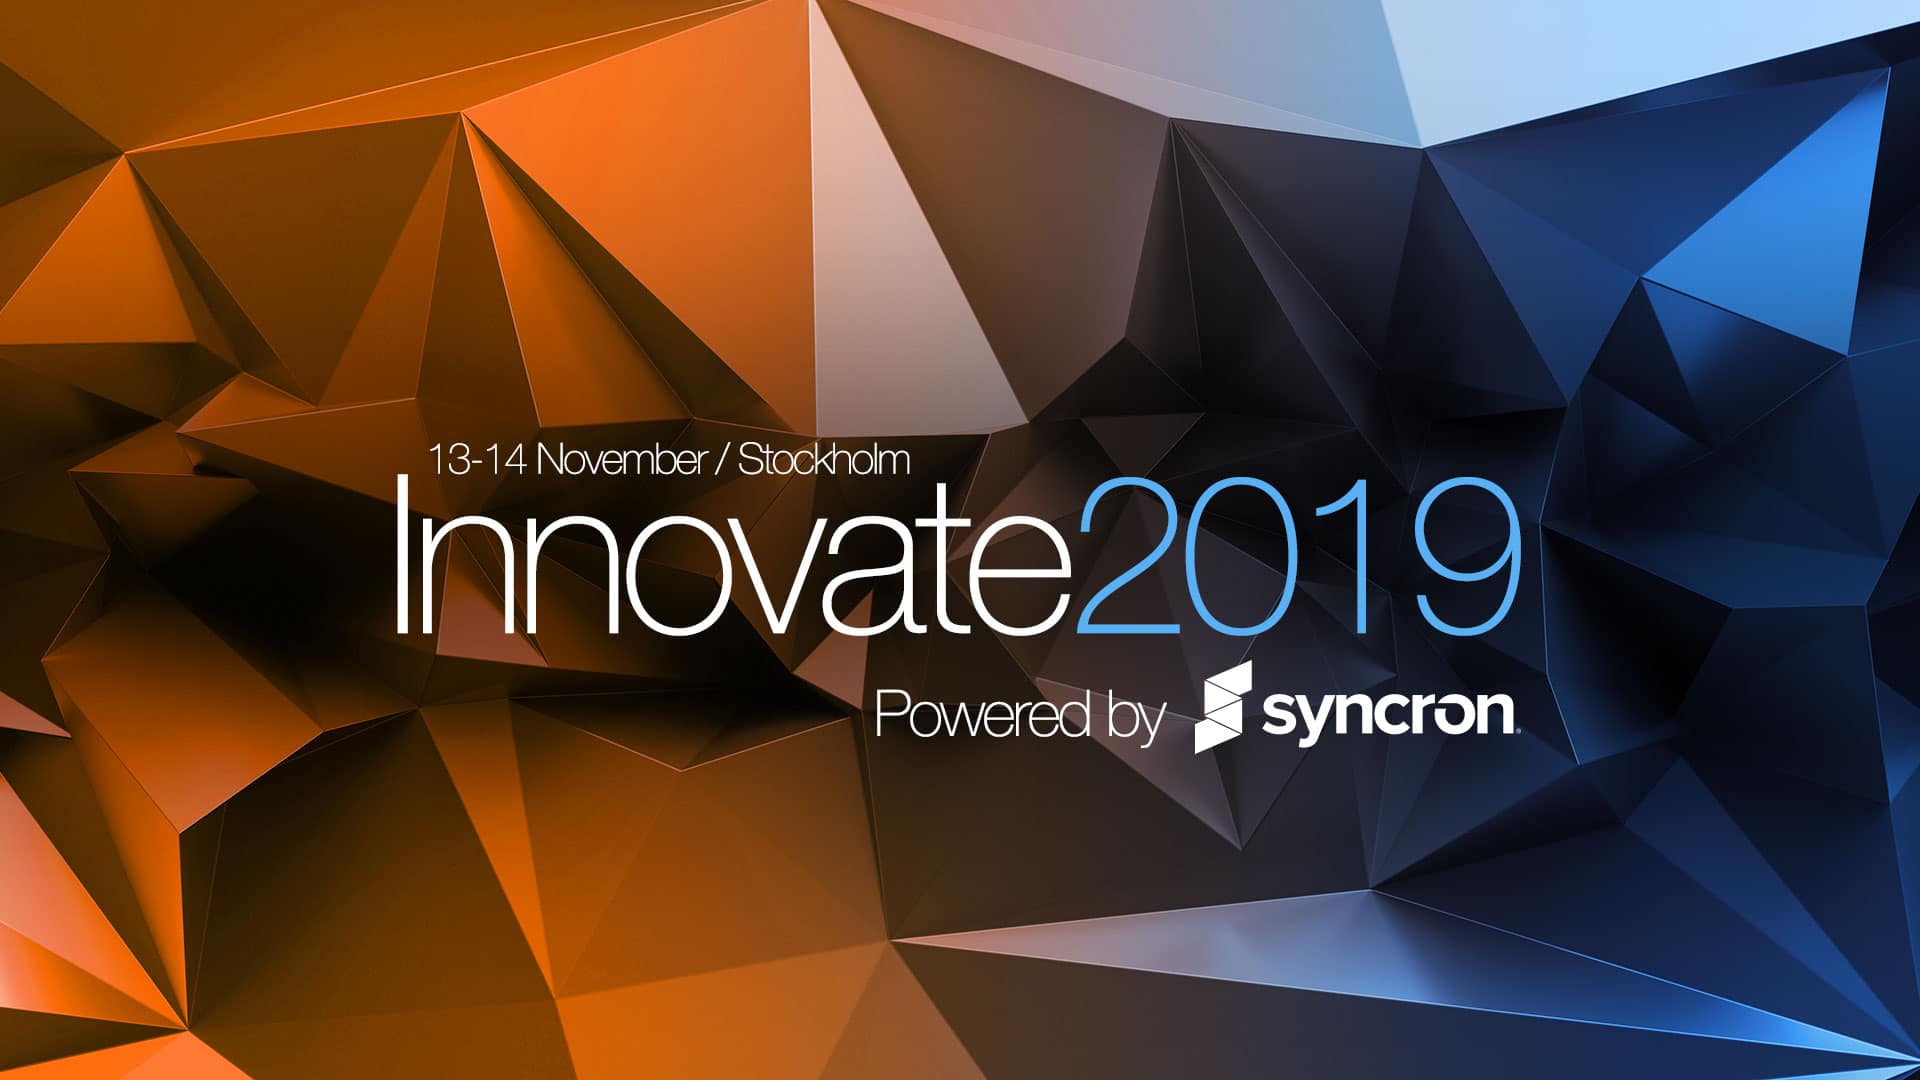 Innovate 2019 show